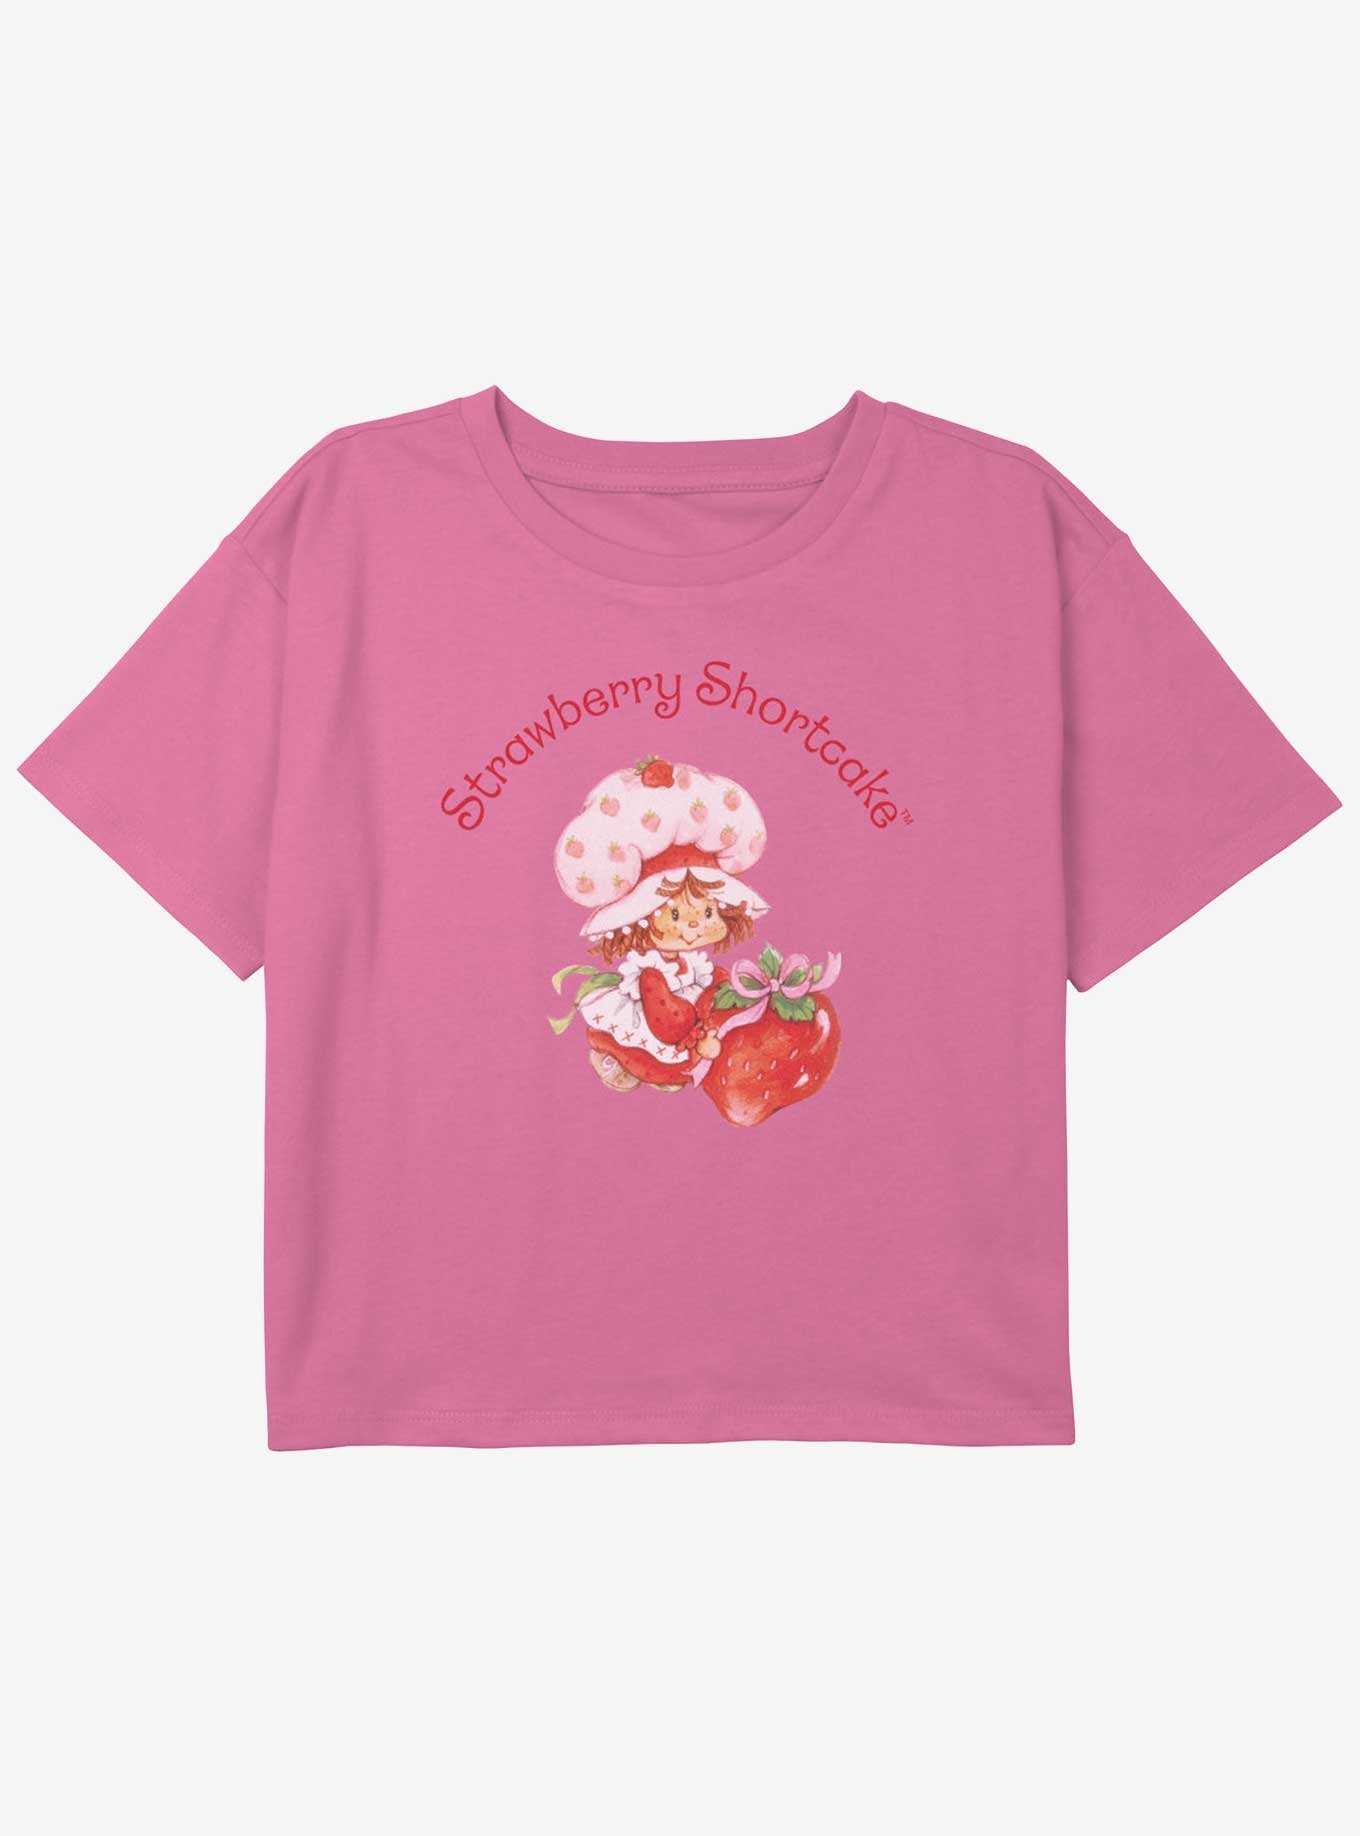 Strawberry Shortcake Bows & Strawberries Portrait  Youth Girls Boxy Crop T-Shirt, , hi-res